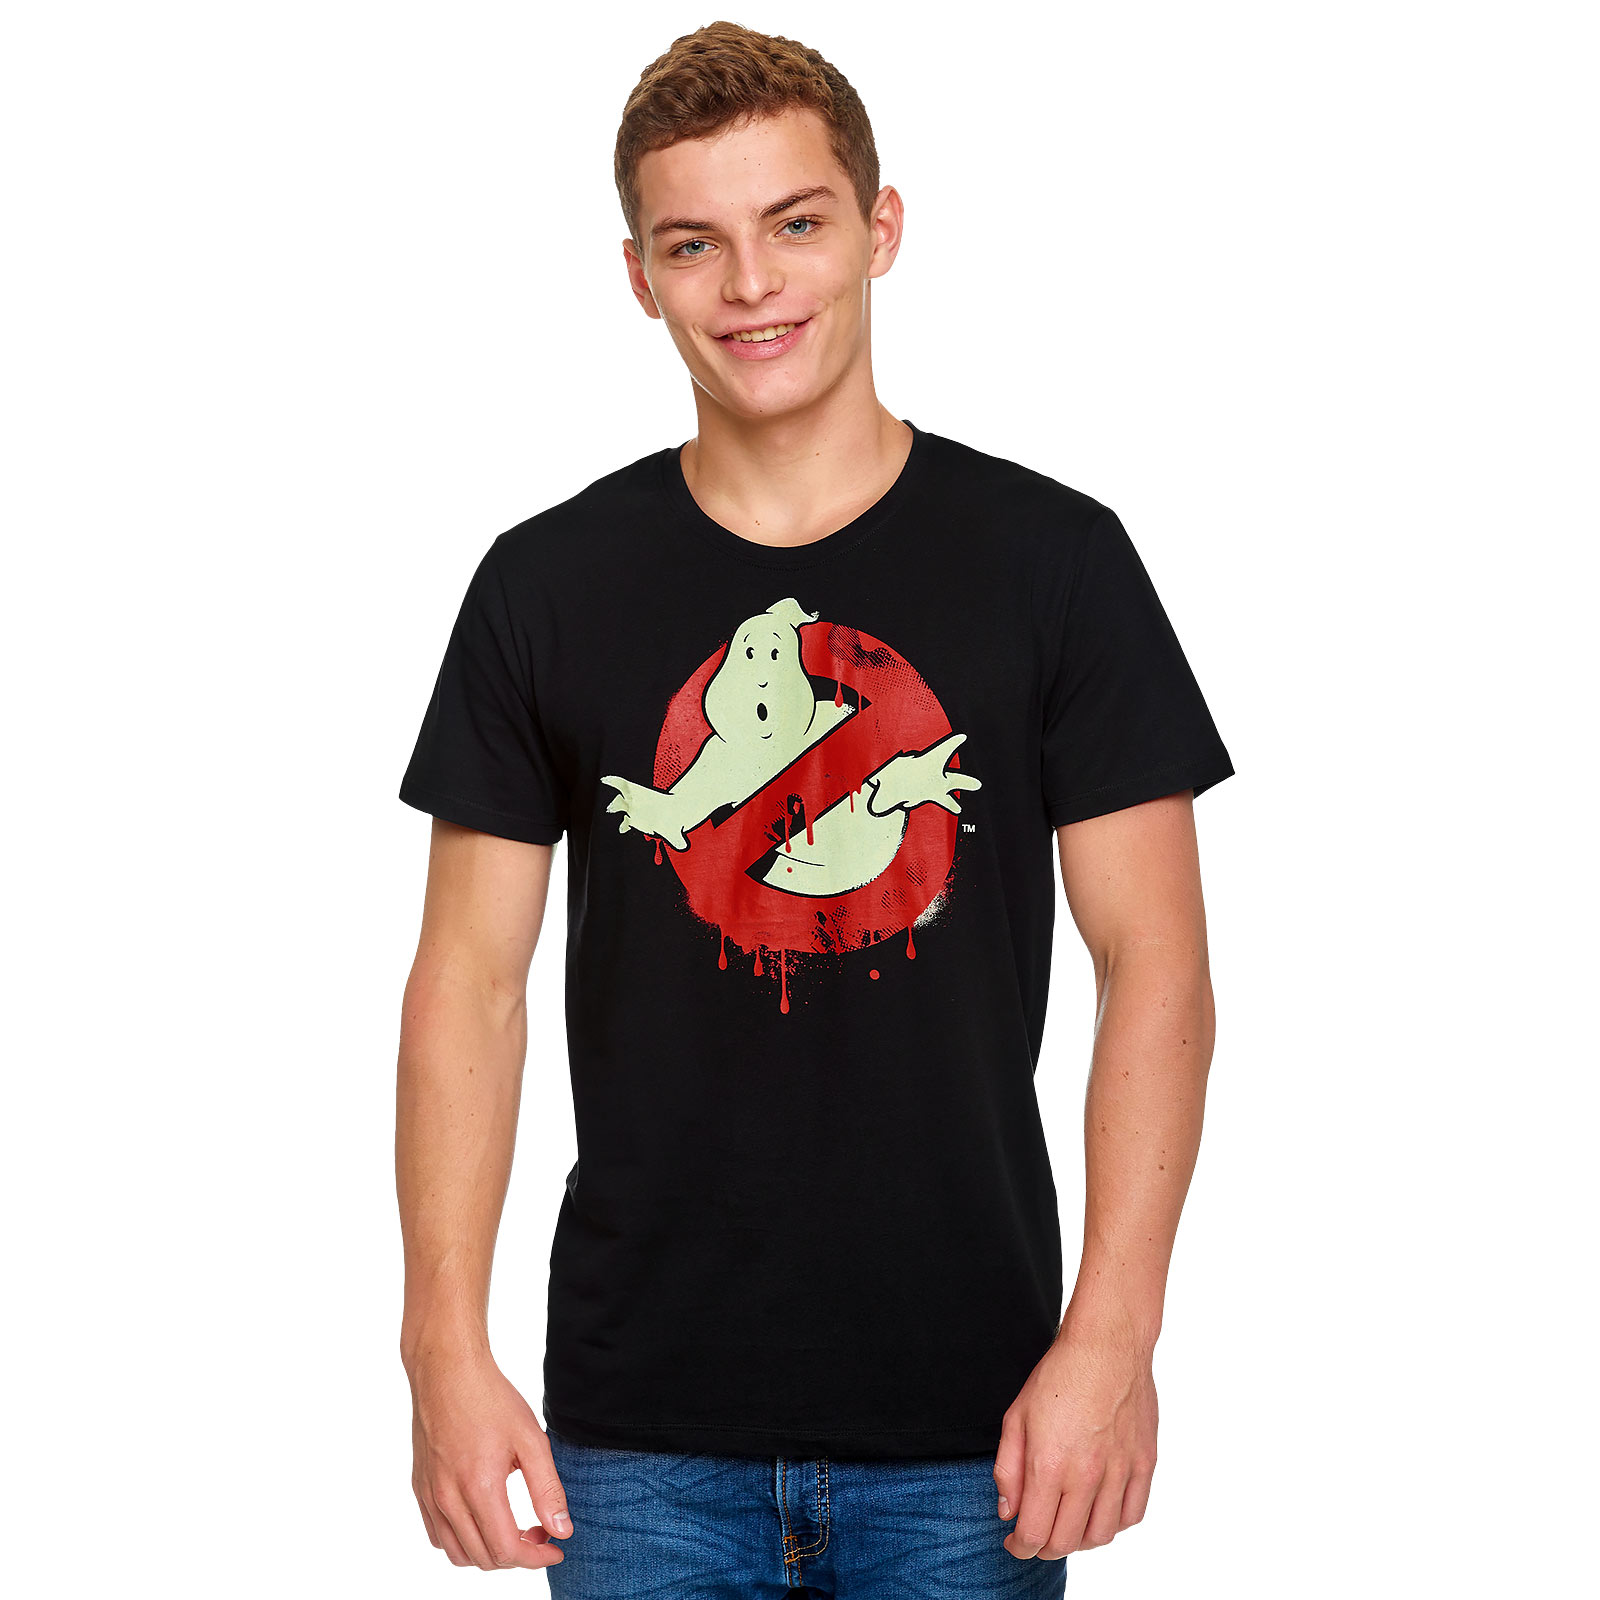 Ghostbusters - T-shirt logo phosphorescent